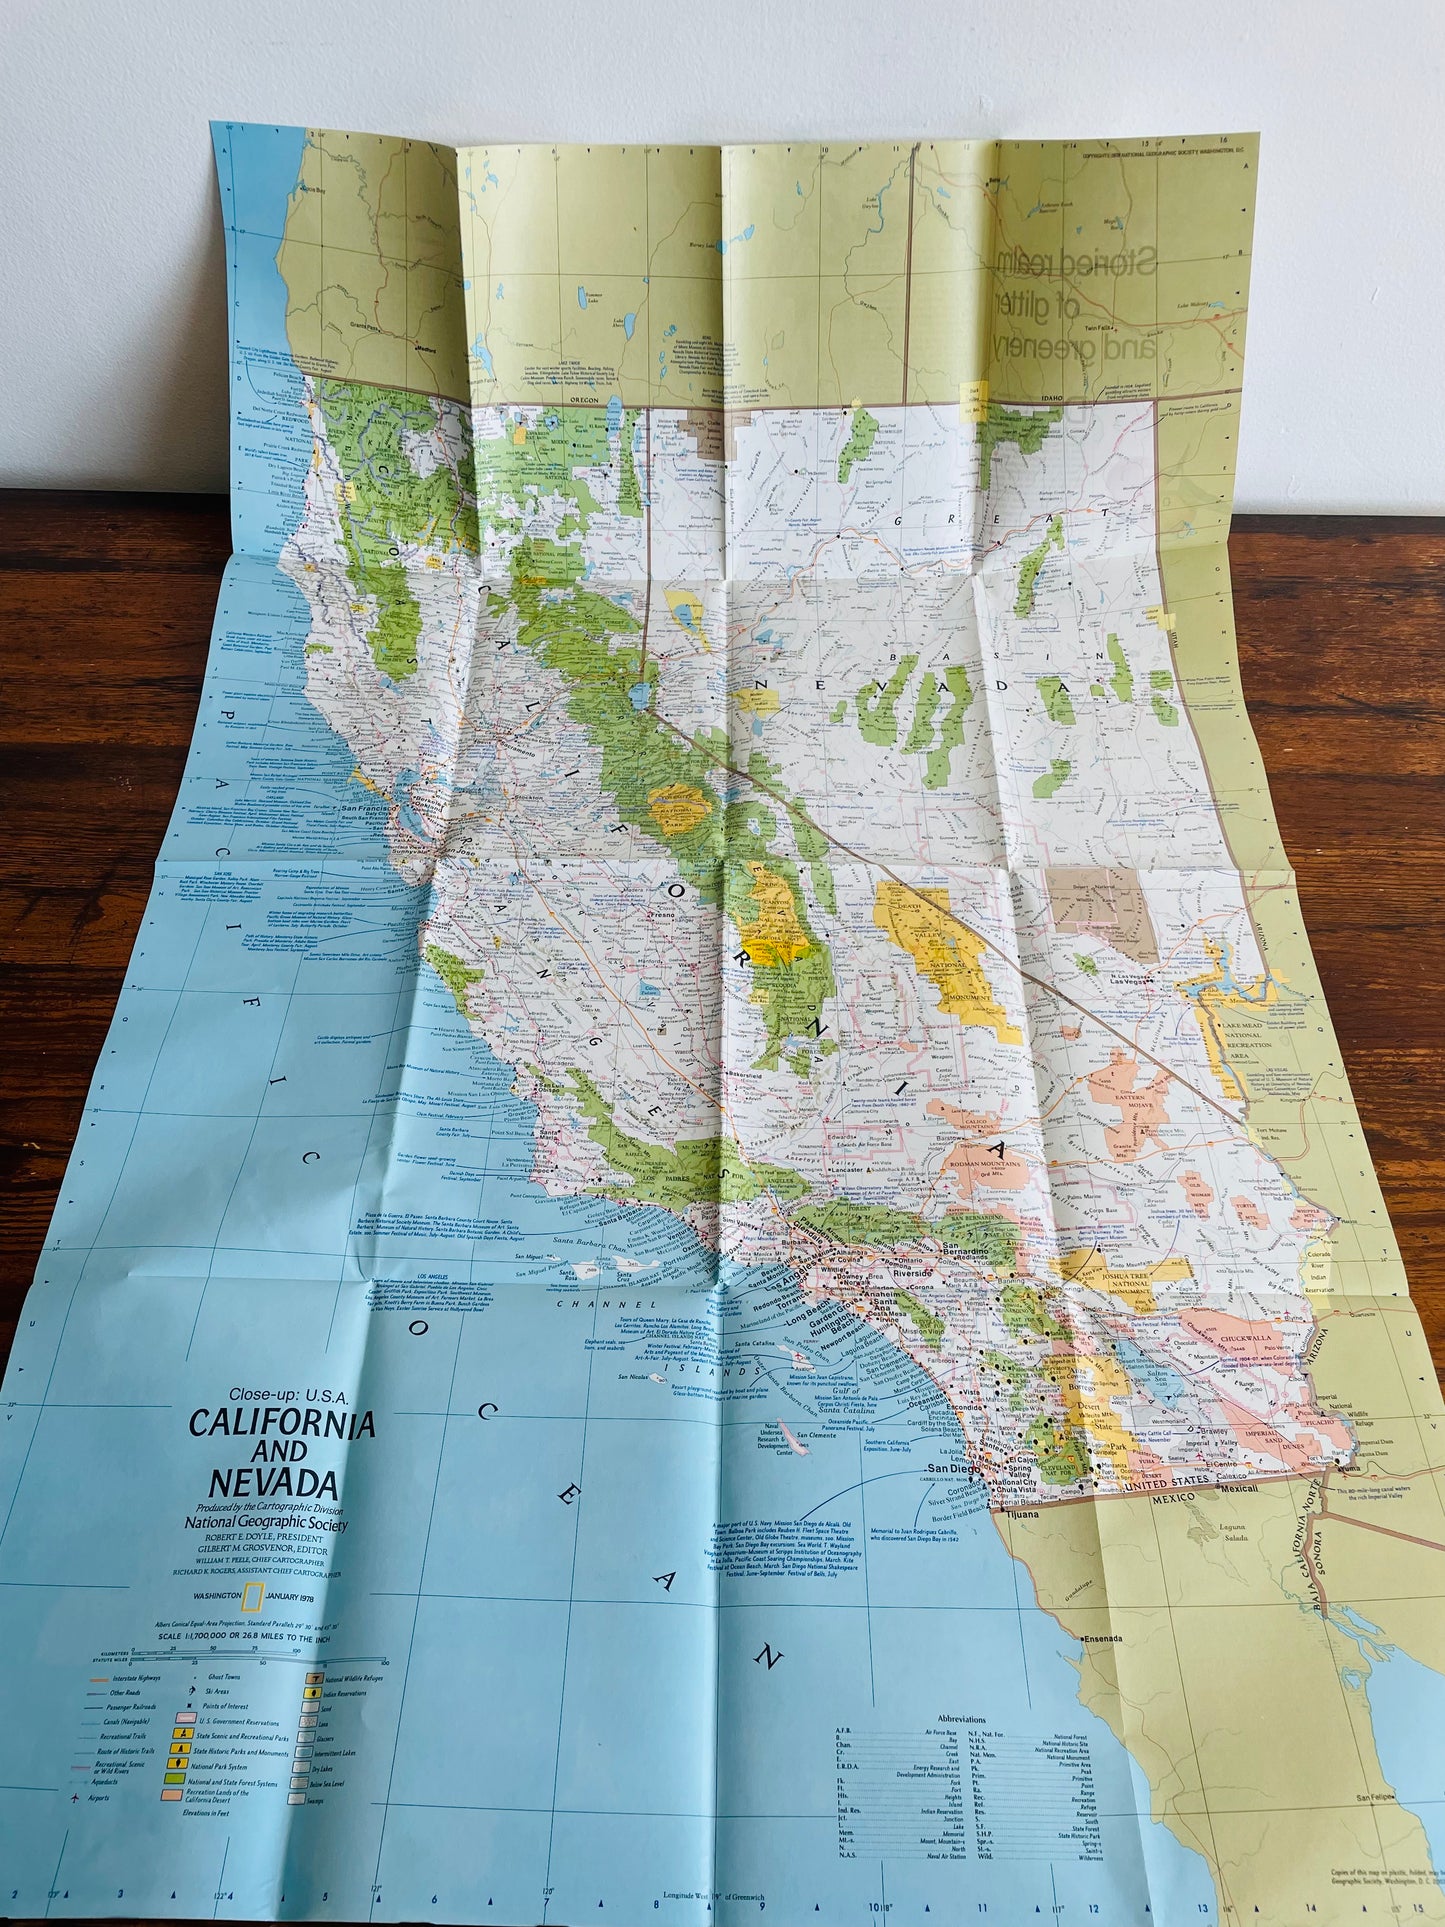 1978 National Geographic Close-Up USA Map - California & Nevada